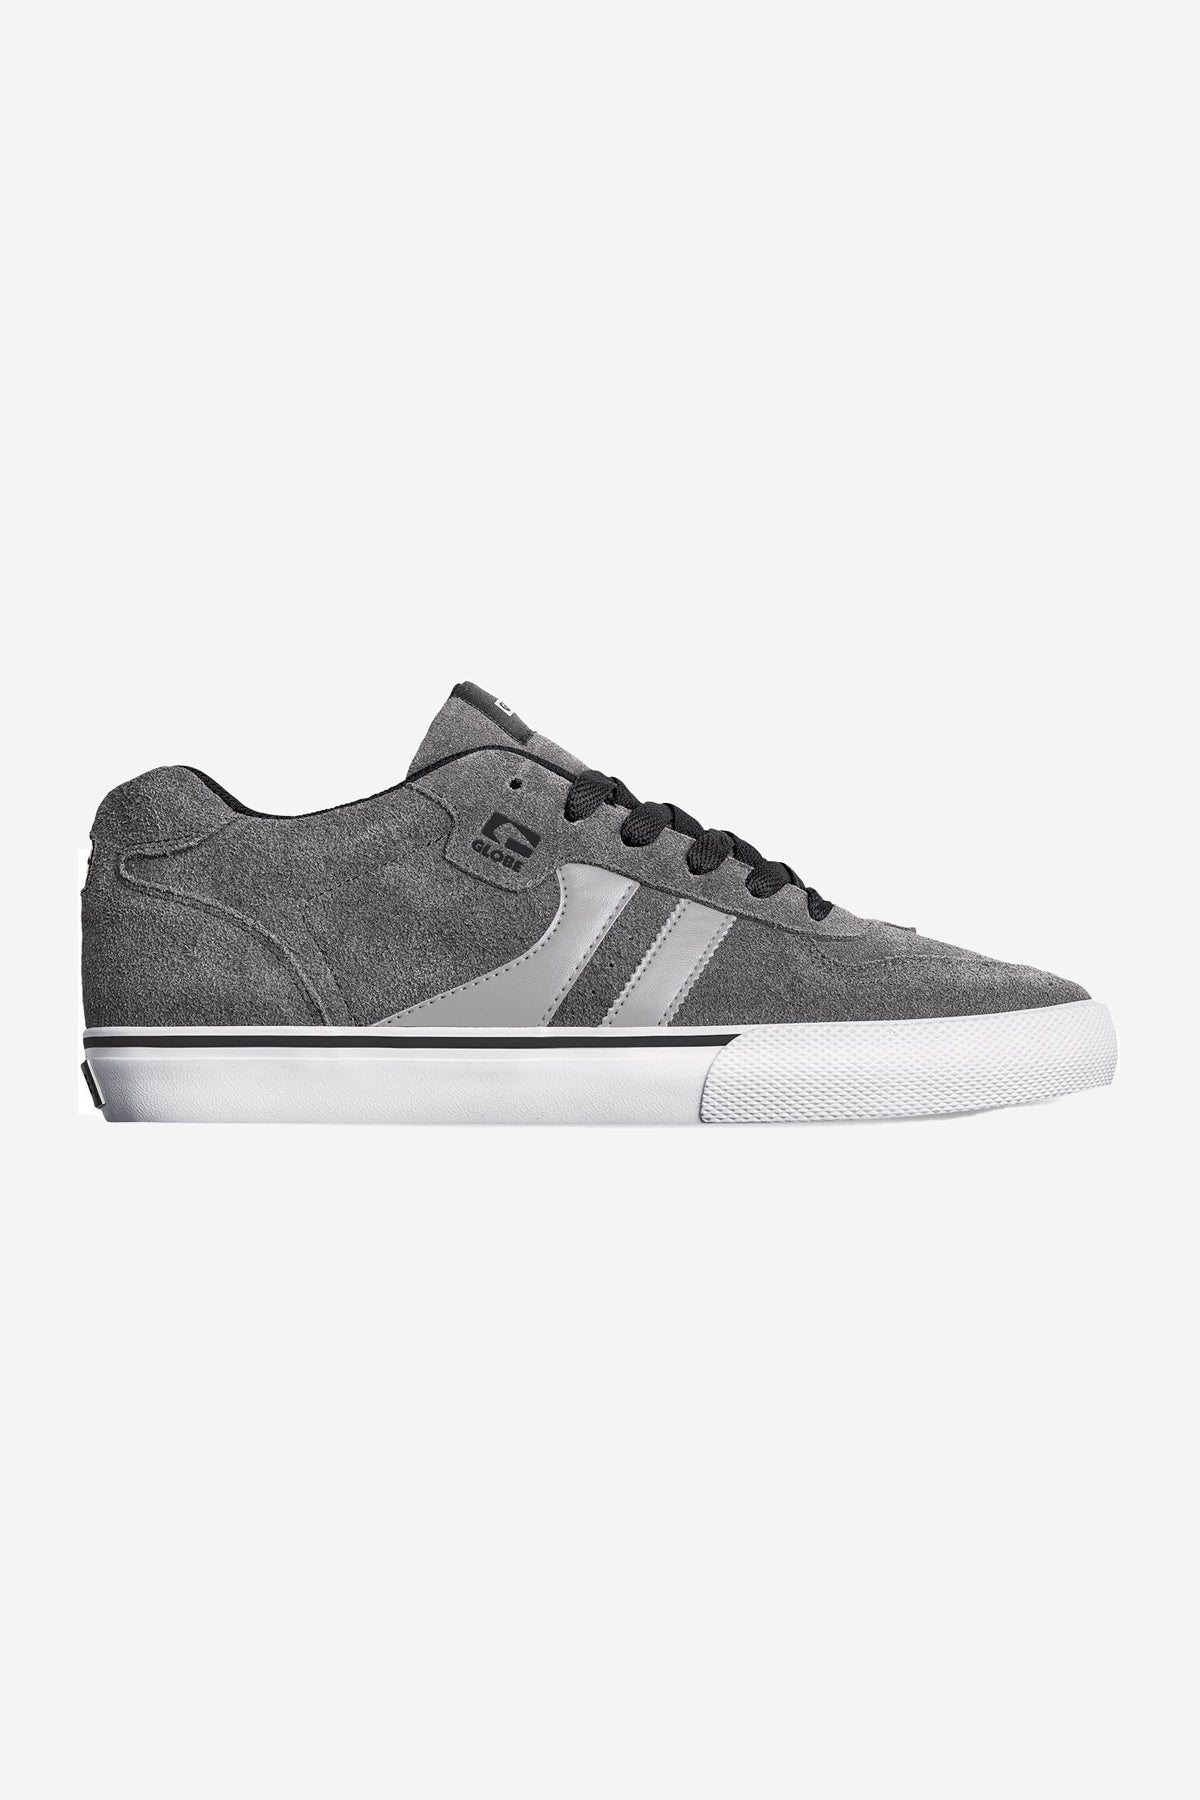 encore-2 charcoal gris skateboard zapatos